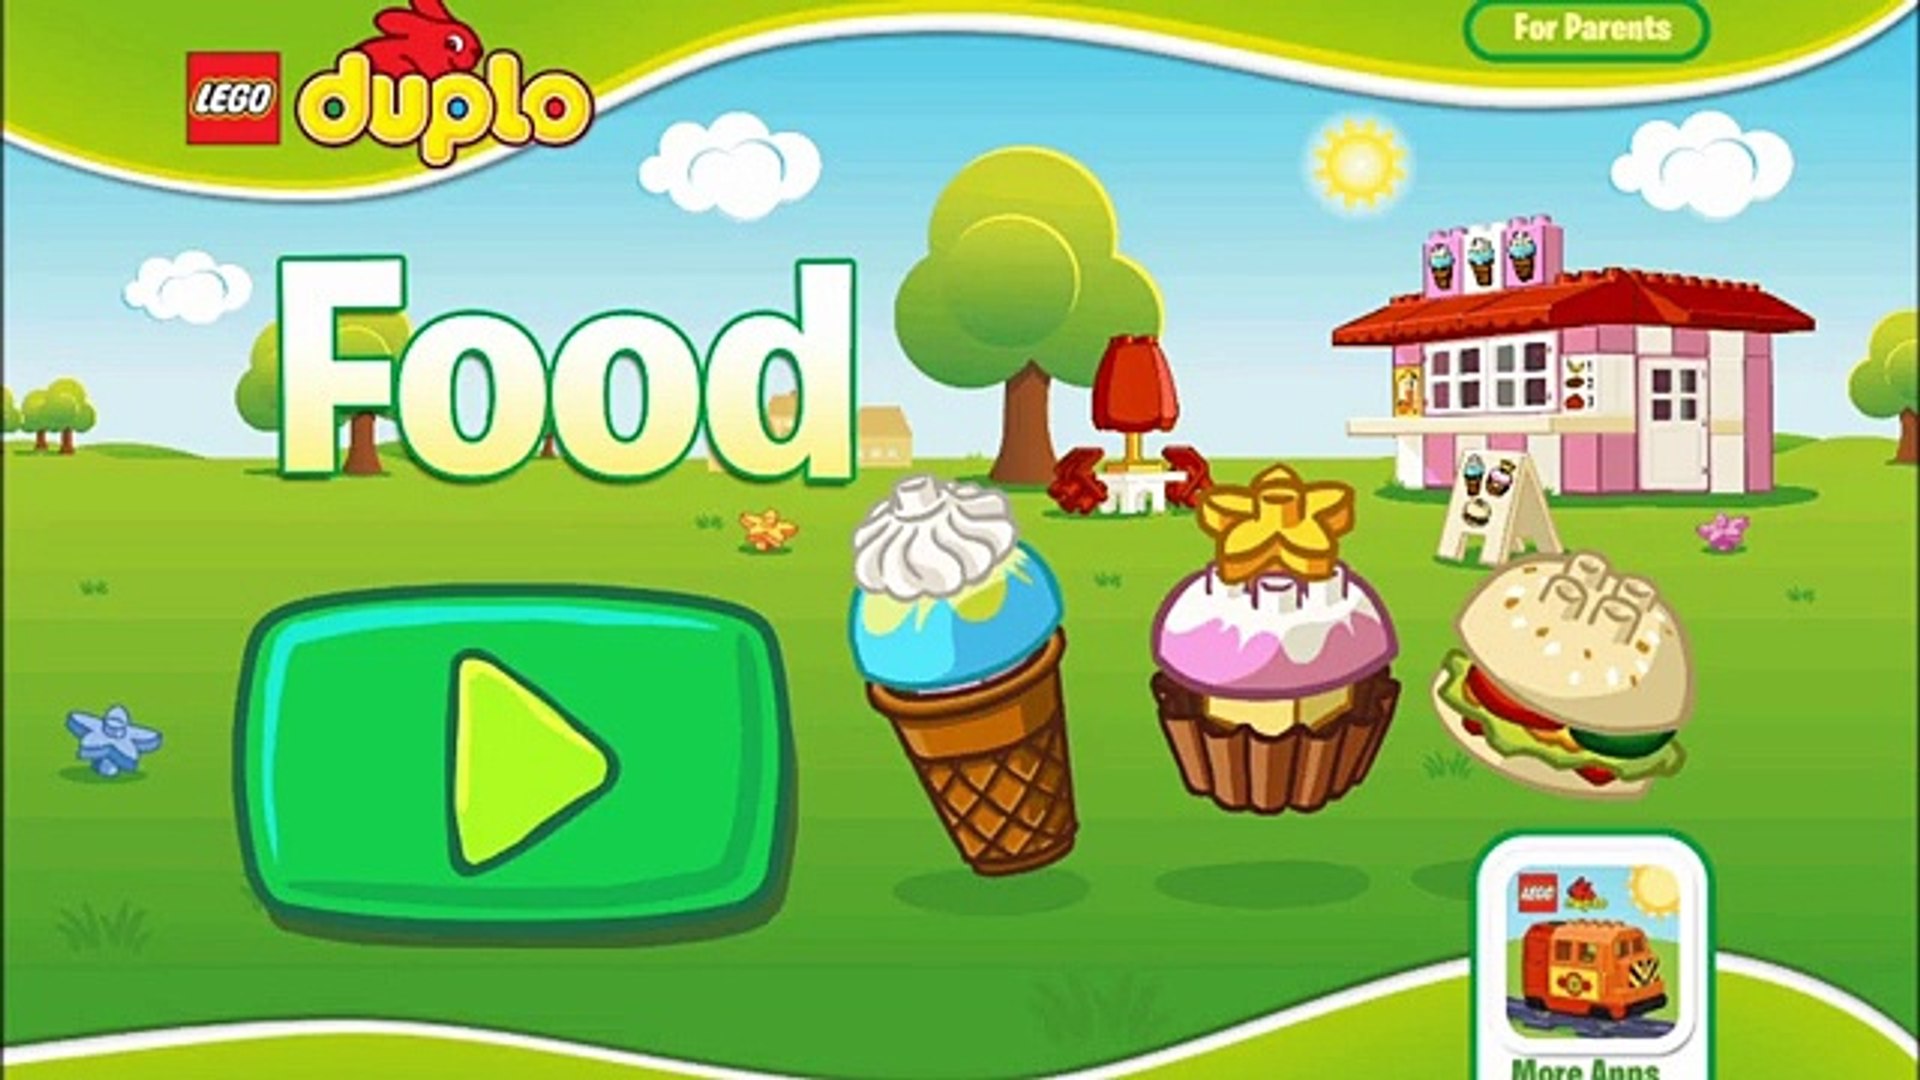 LEGO Duplo Food - best iPad app demos for kids.mp4 - video Dailymotion